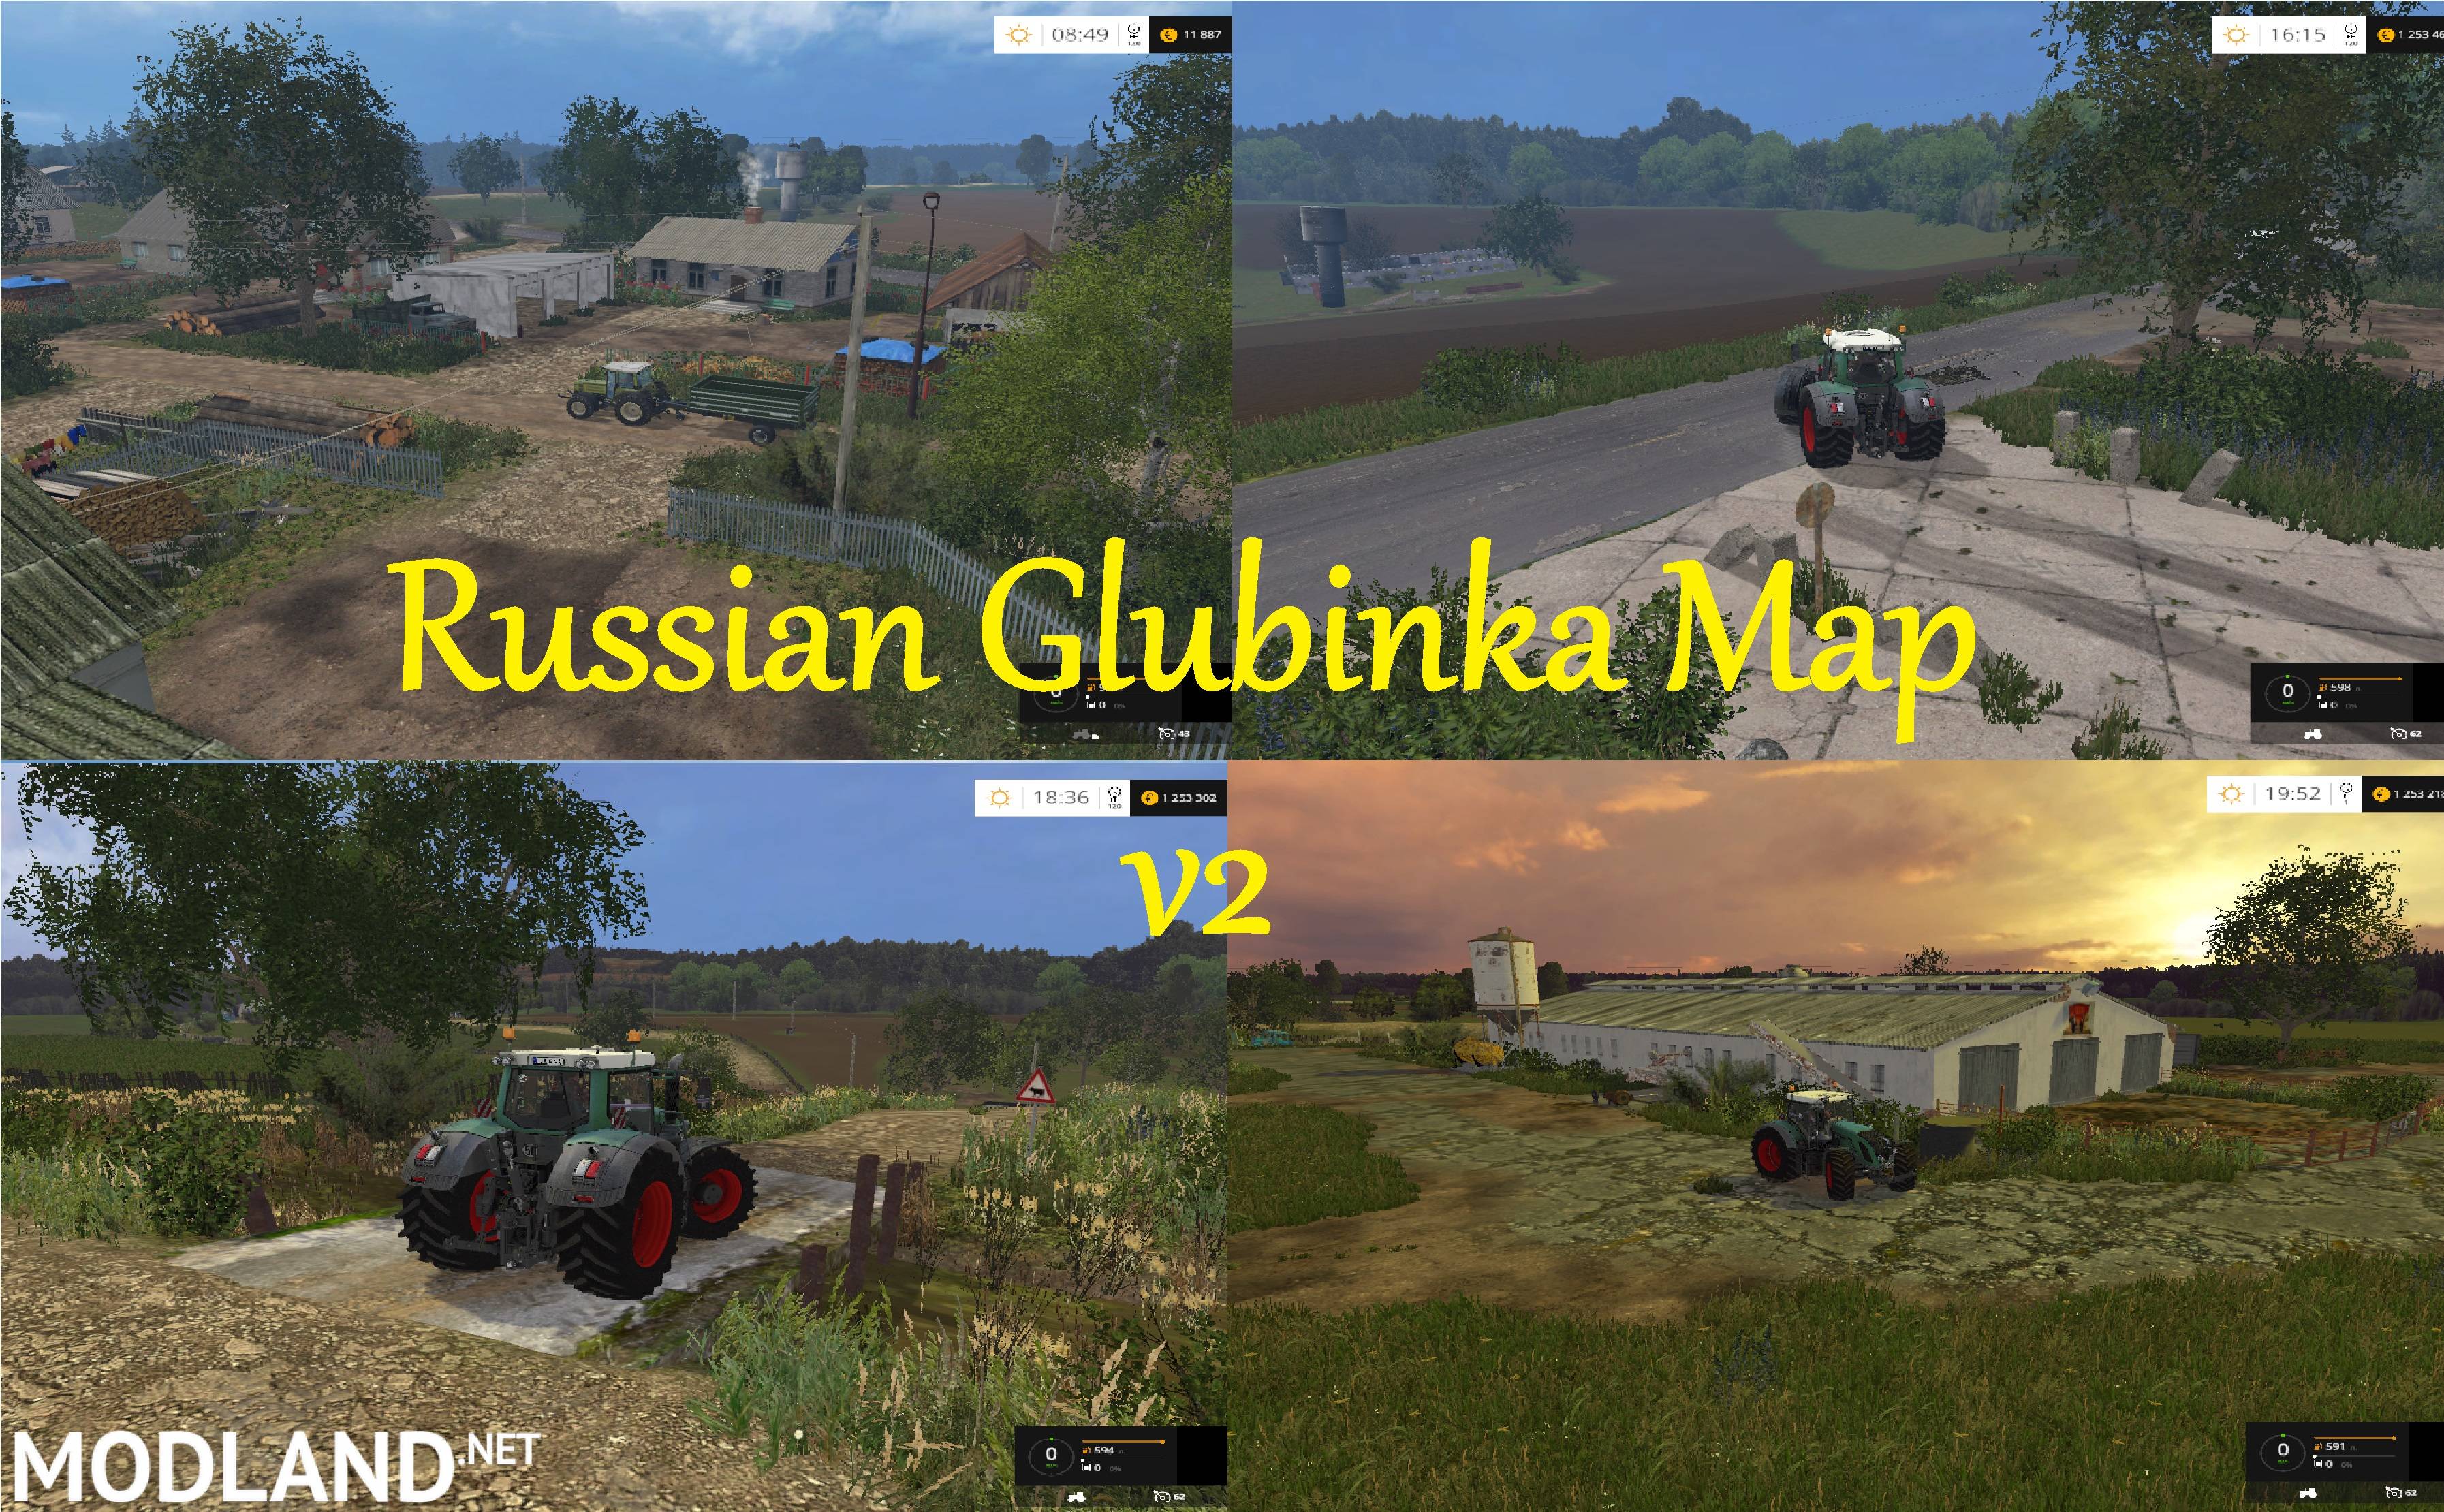 Russian Glubinka Map v 2.0 mod for Farming Simulator 2015 / 15  FS 